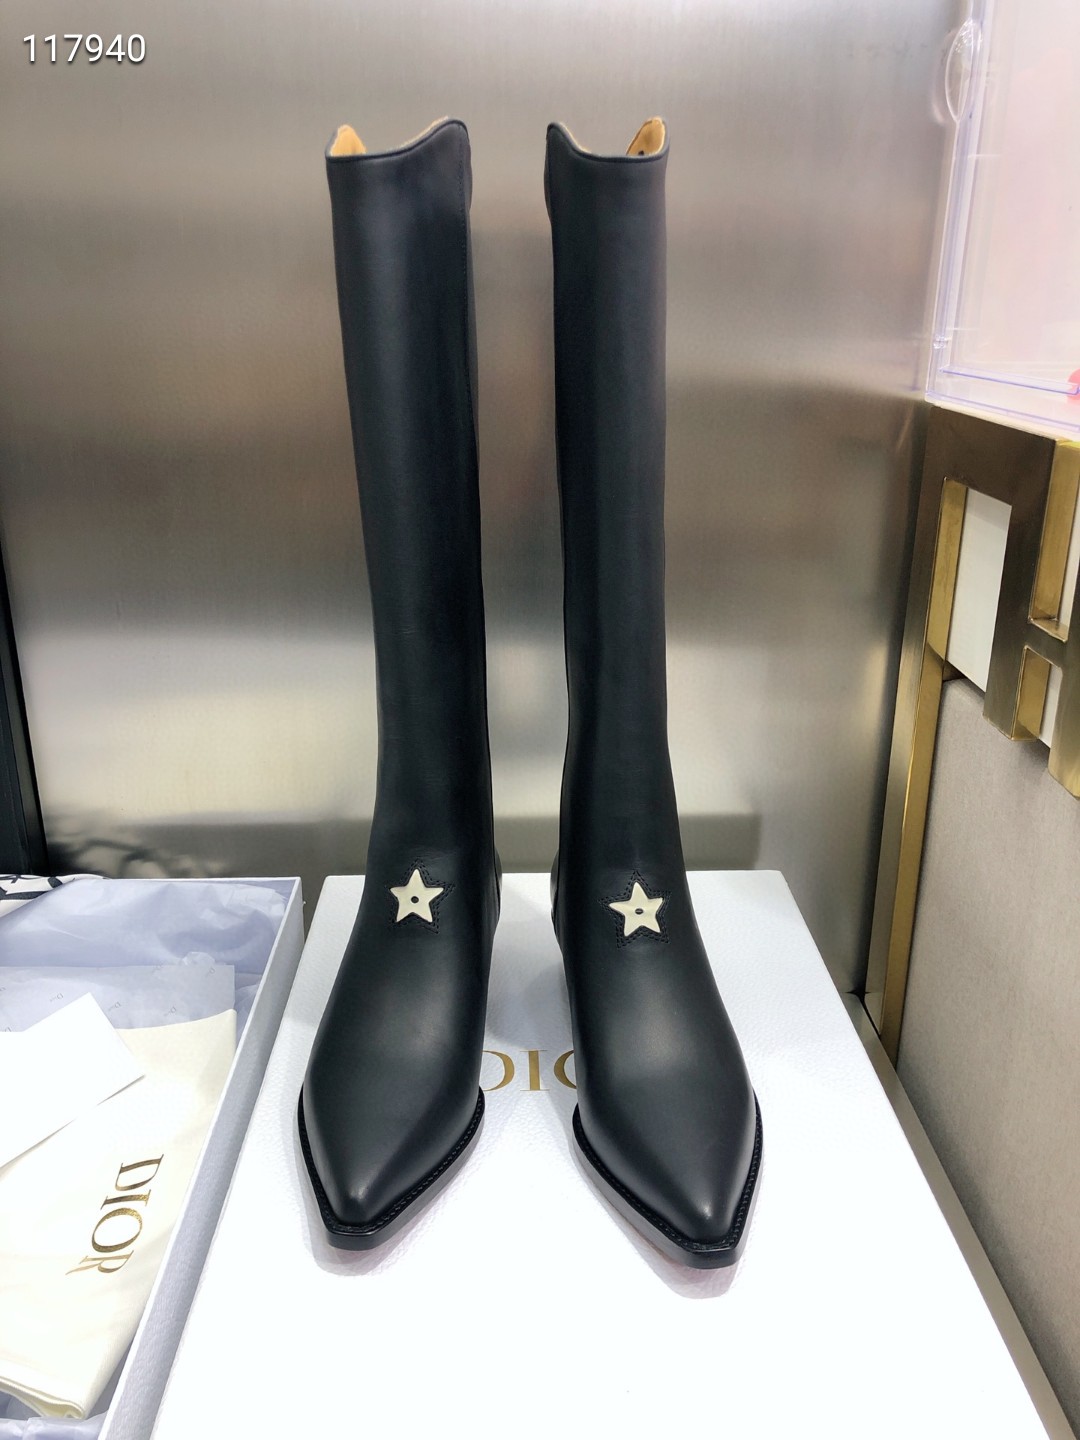 Dior Shoes Dior800DJ-5 Heel height 5CM